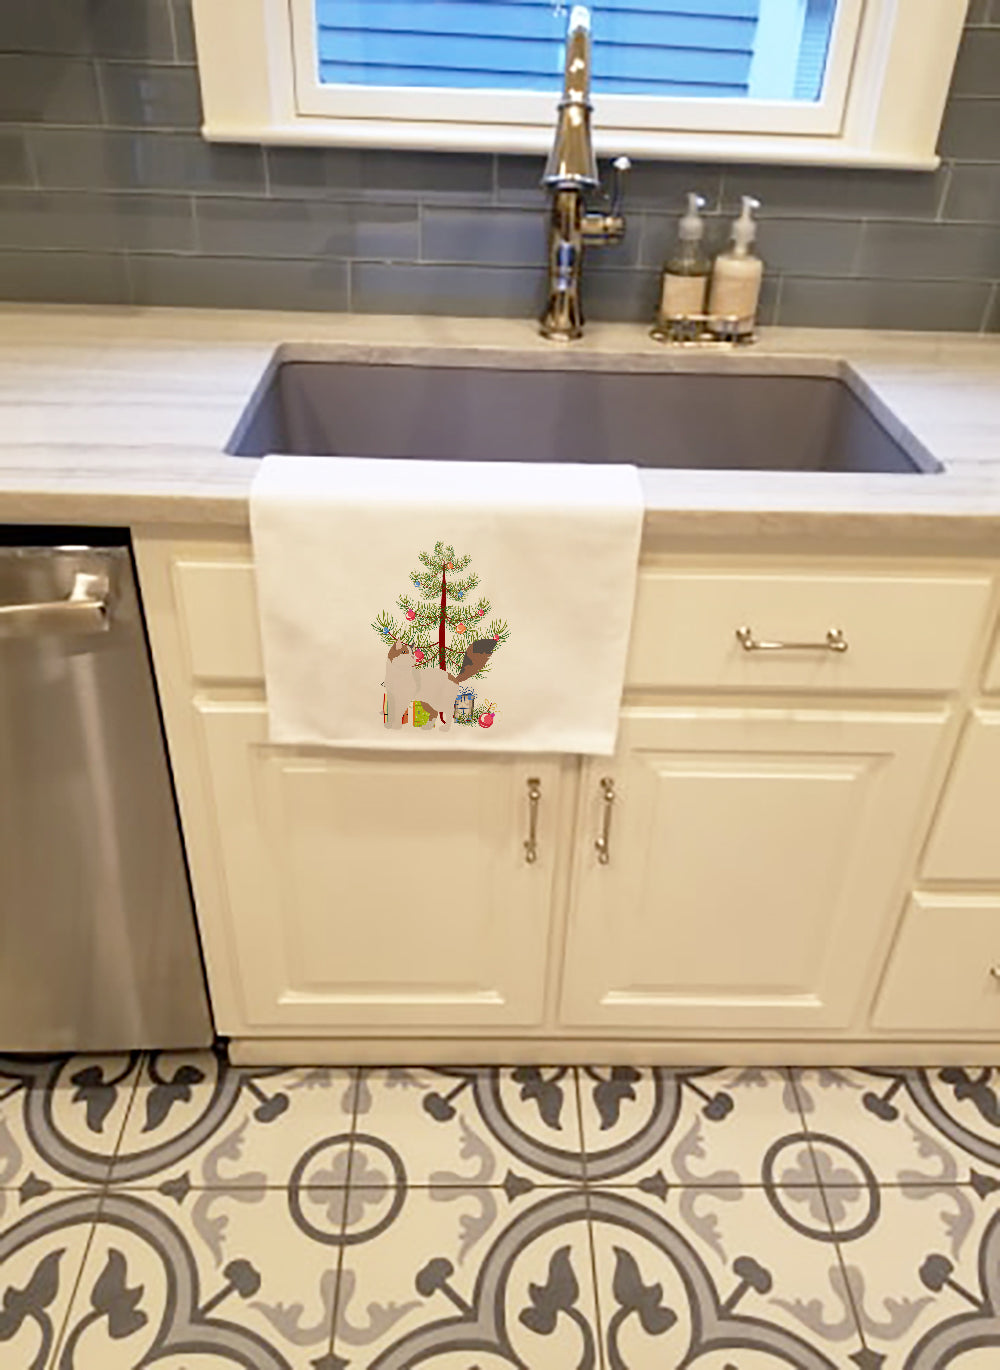 Buy this Turkish Van Cat Merry Christmas White Kitchen Towel Set of 2